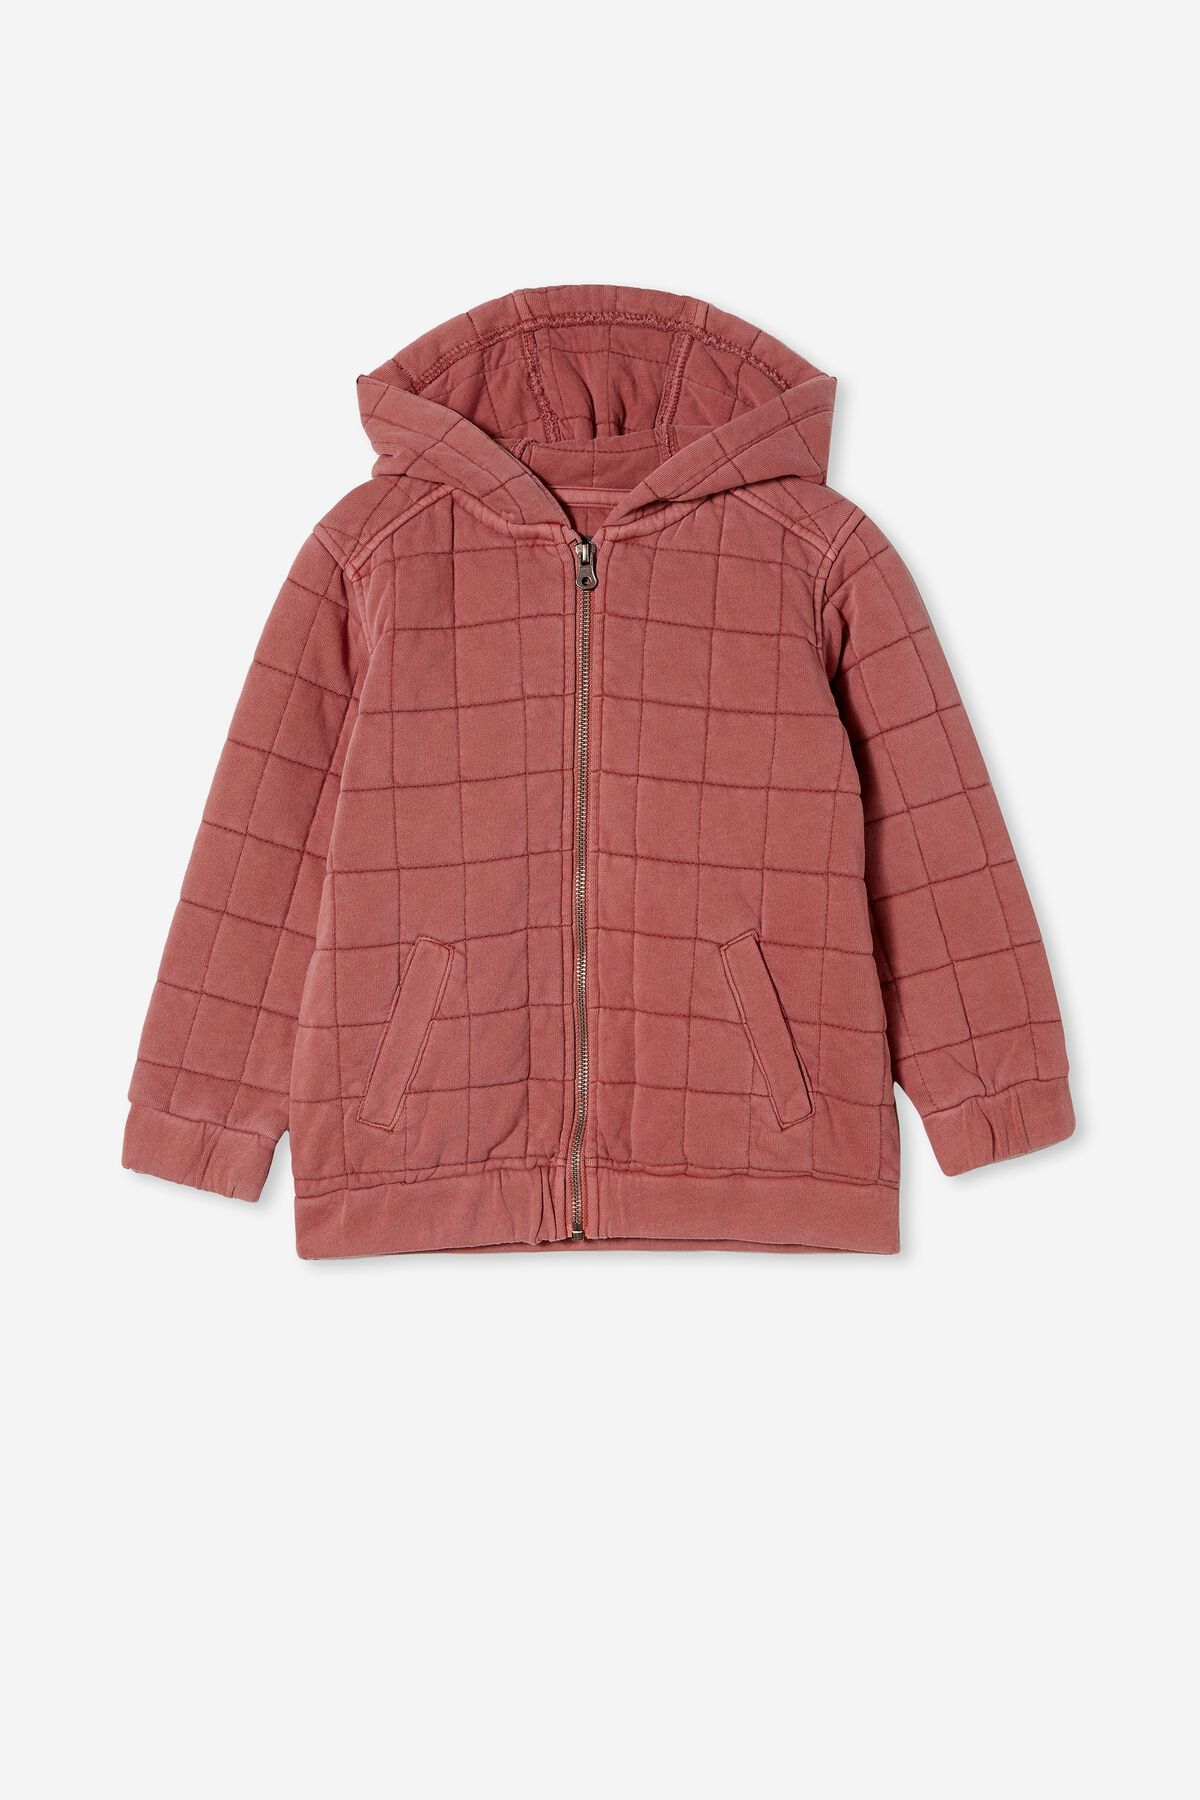 Misty Longline Hooded Jacket | Cotton On (ANZ)